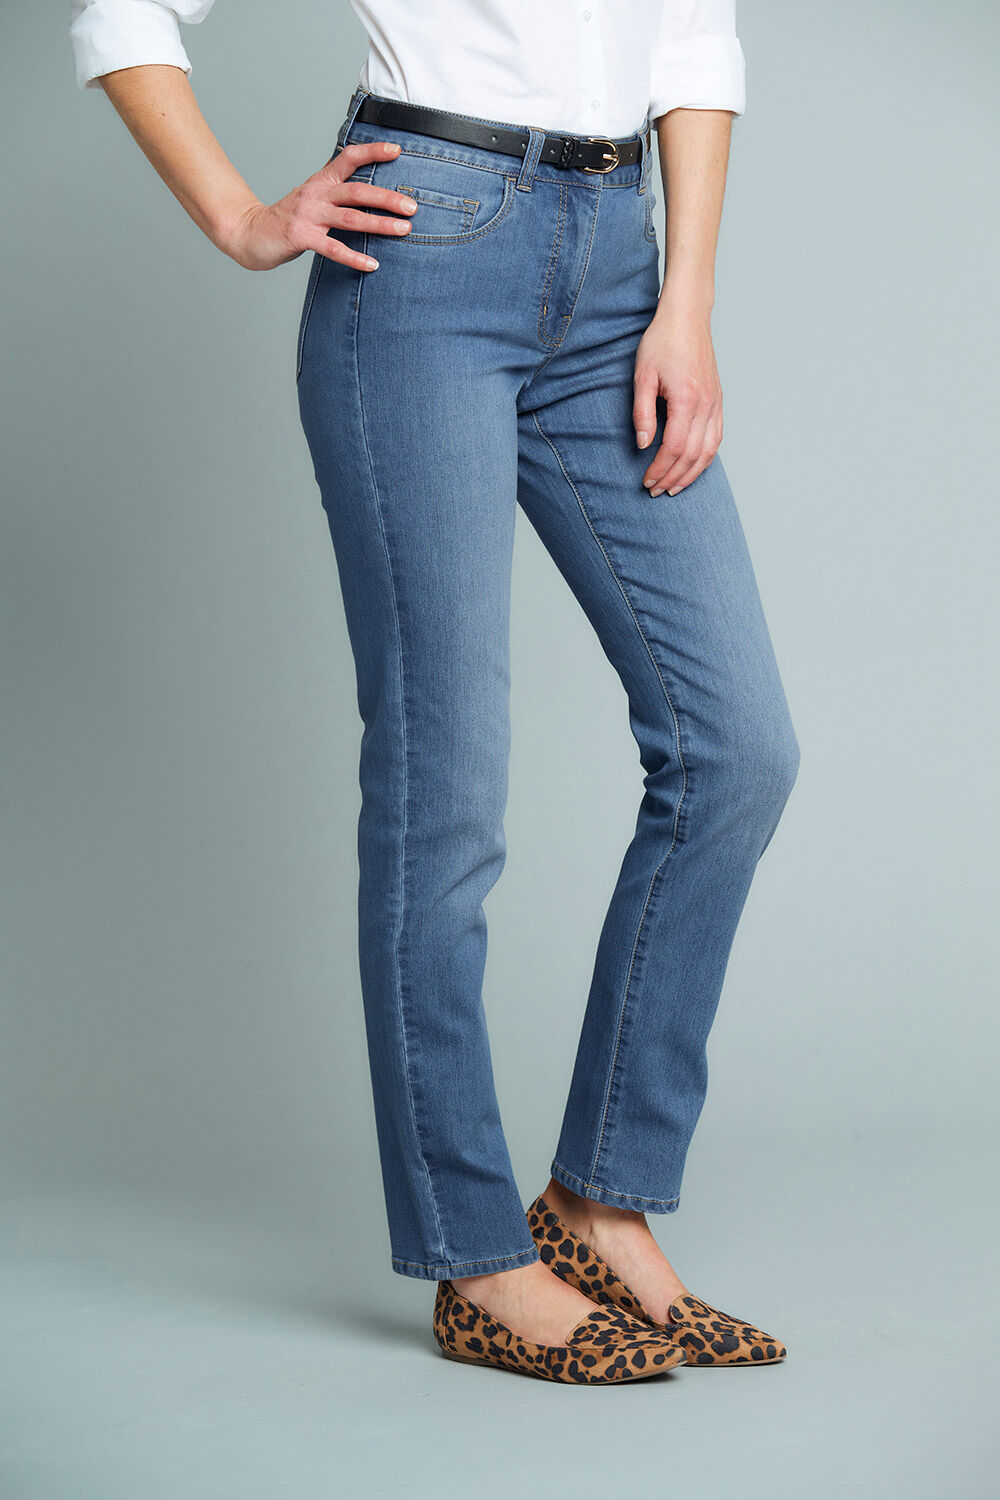 ladies slim leg jeans uk